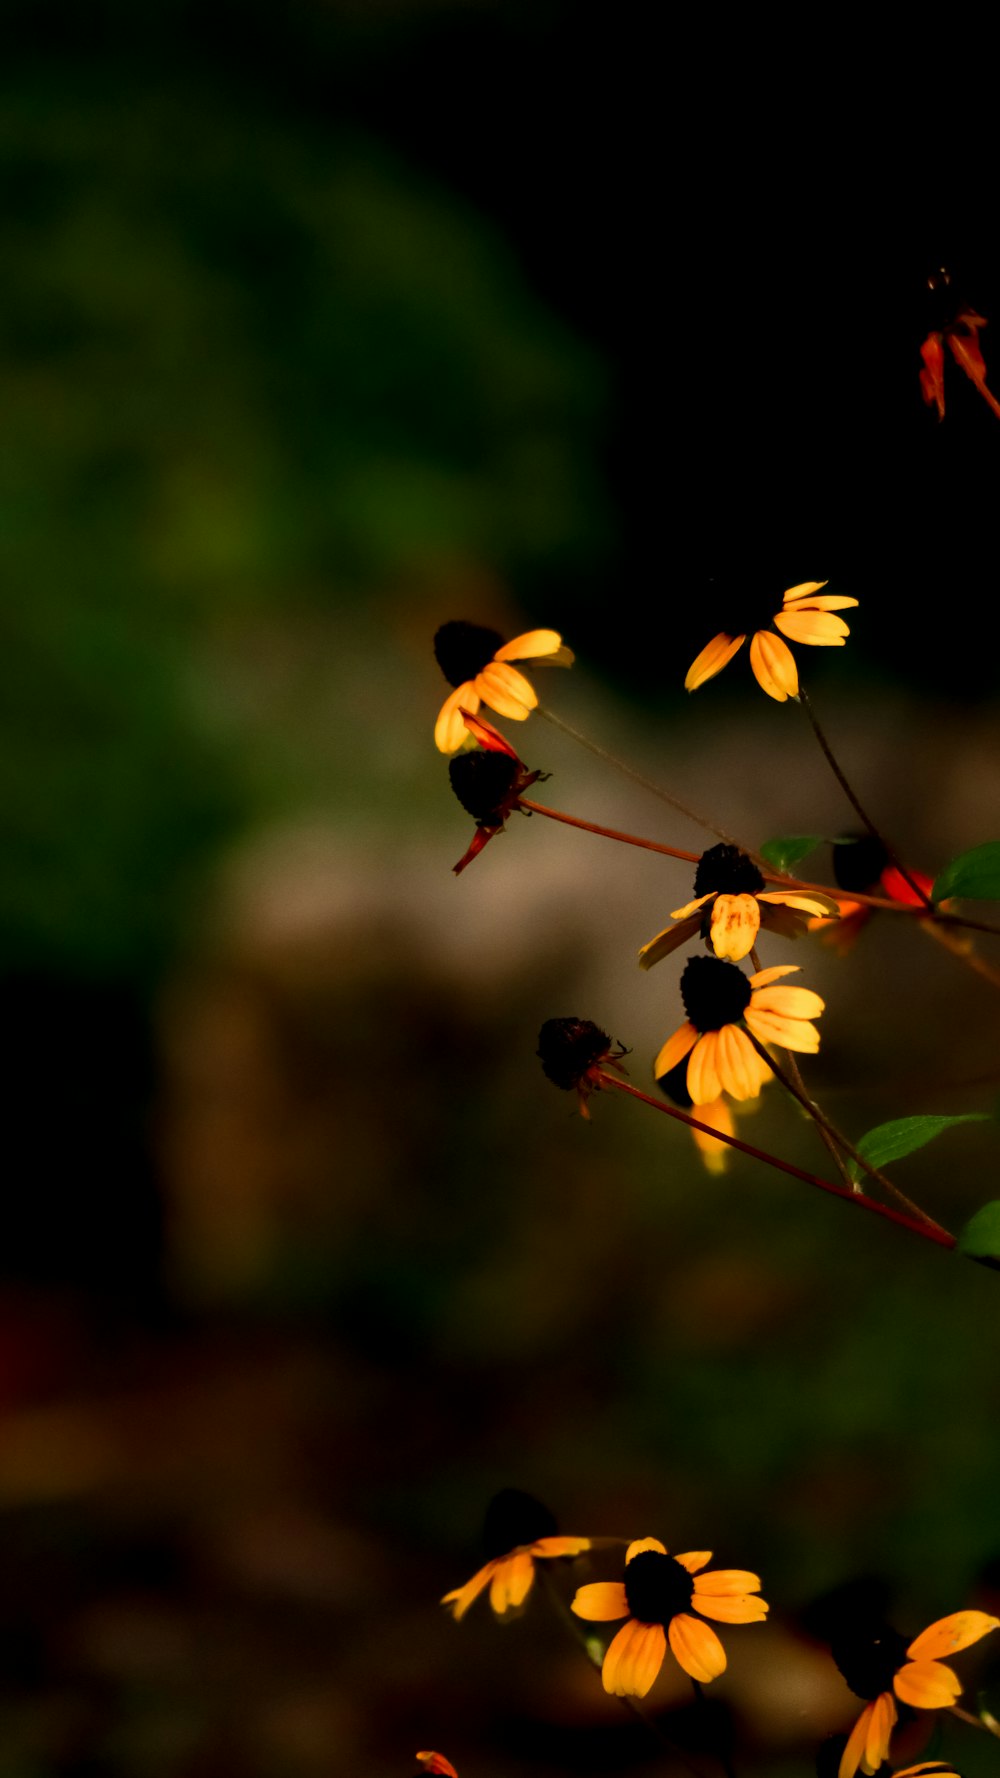 yellow and red flower in tilt shift lens